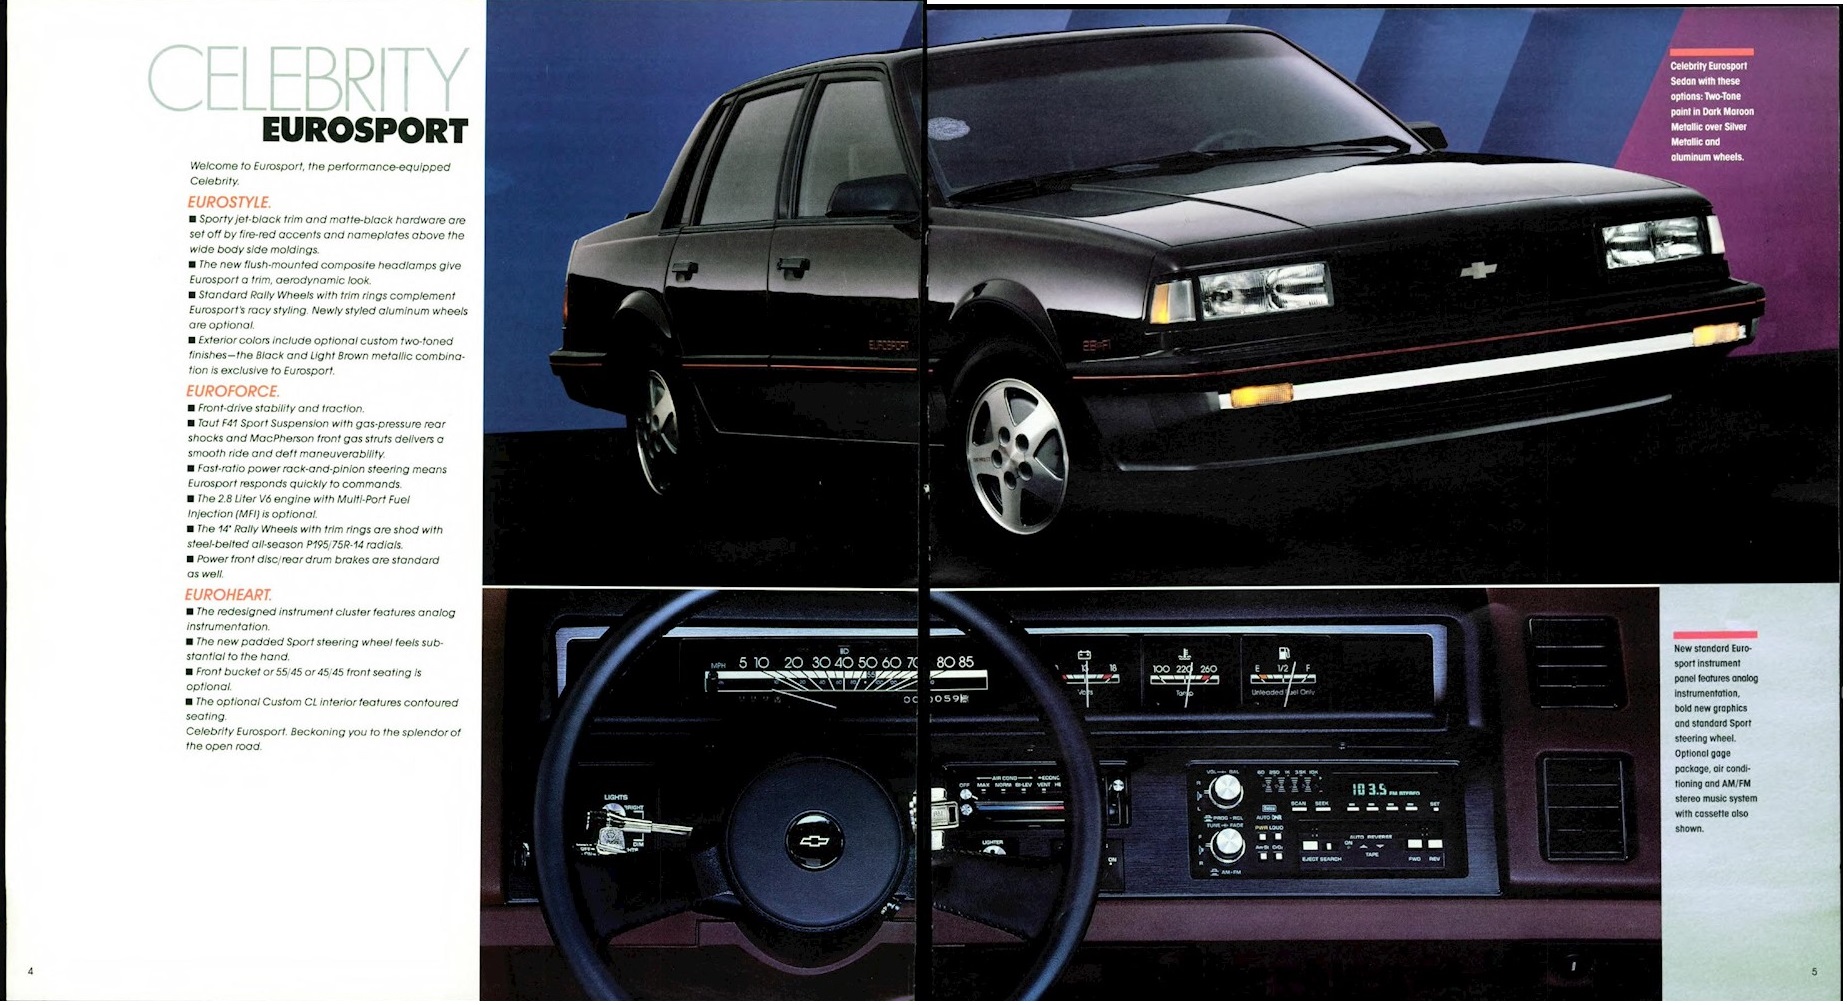 1987 Chevrolet Celebrity 04-05